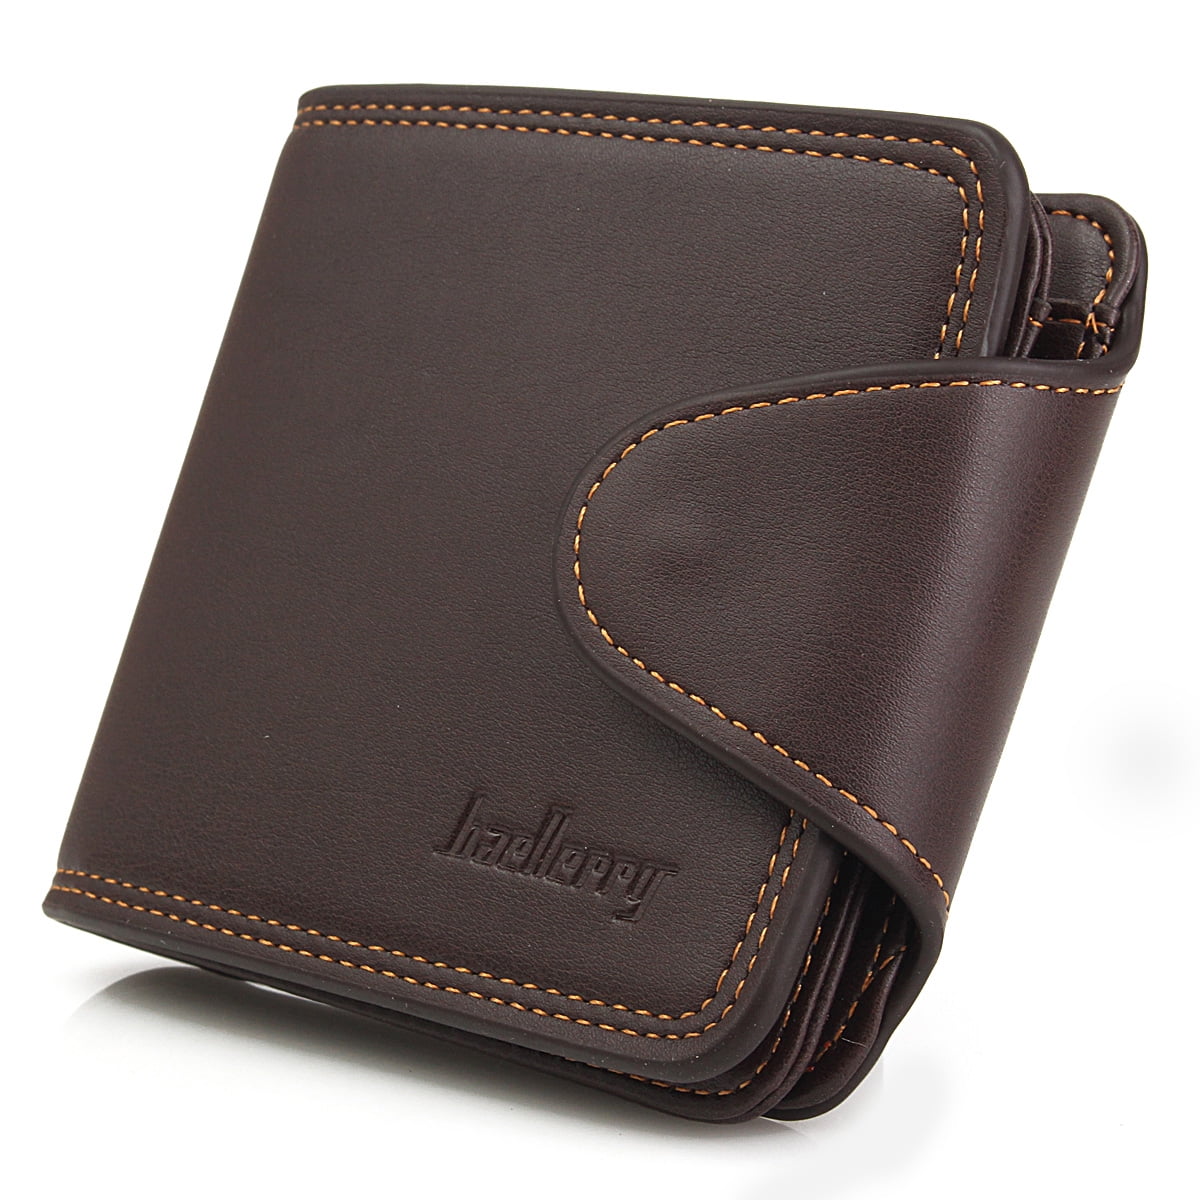 KUDOSALE - Men Leather Card Holder Coin Purse Pockets Button Bifold Money Clip Short Wallet ...